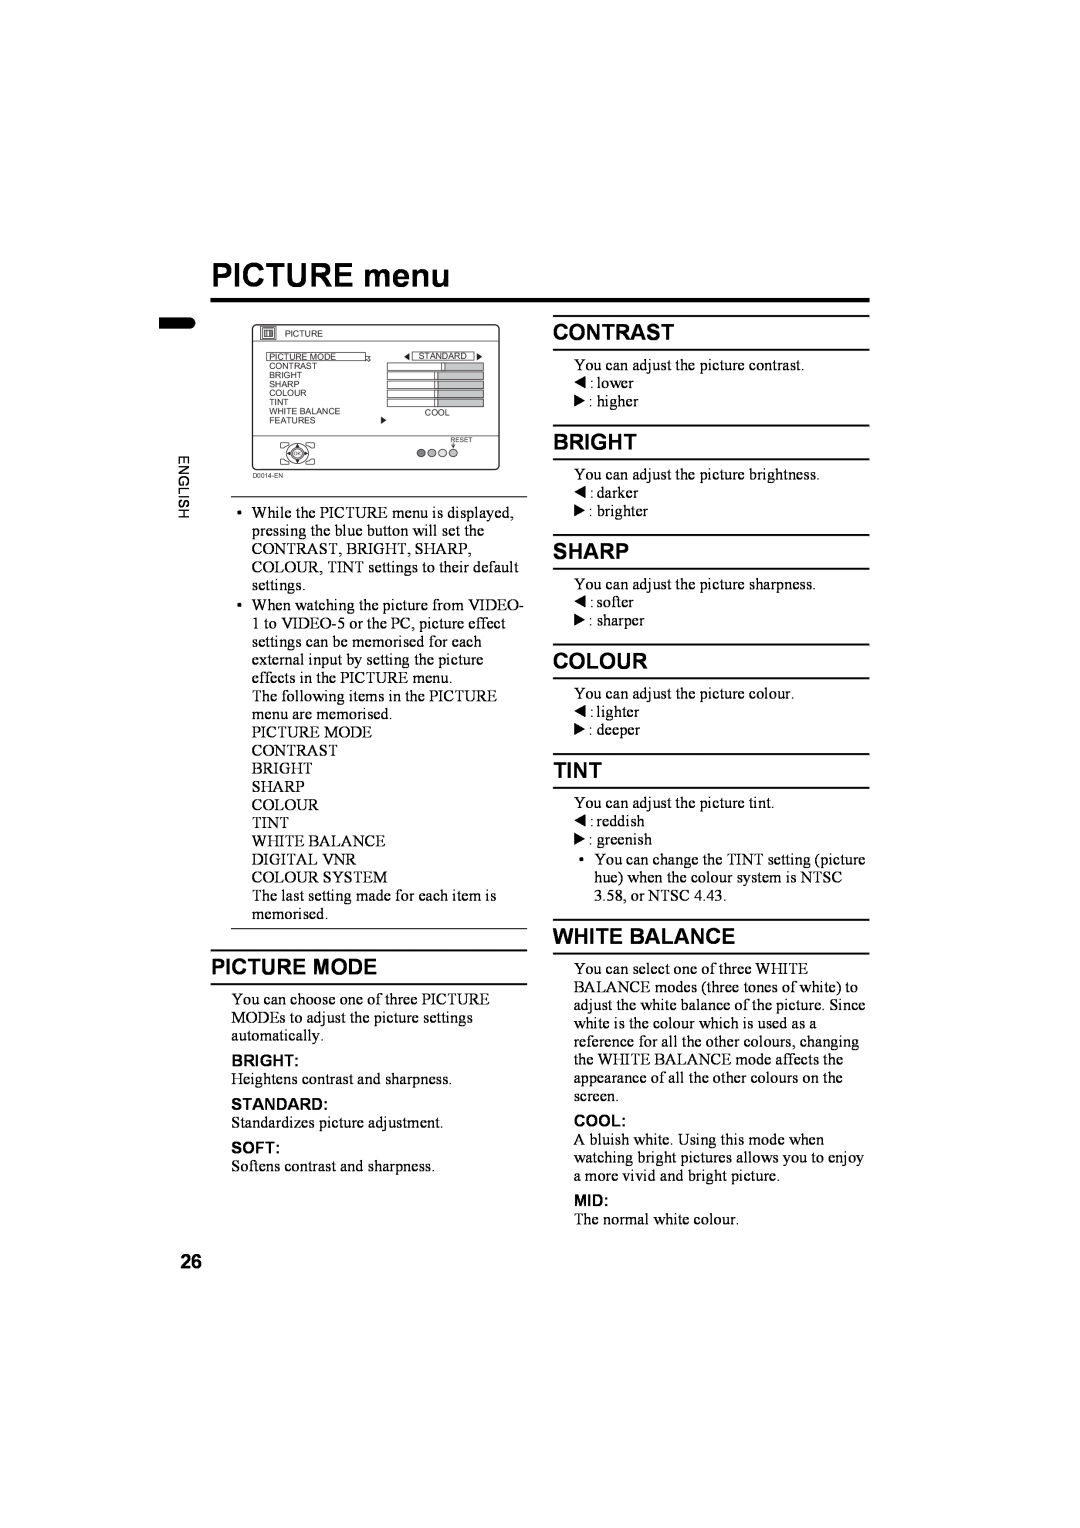 JVC 1004MKH-CR-VP PICTURE menu, Contrast, Picture Mode, Bright, Sharp, Colour, Tint, White Balance, Standard, Soft, Cool 